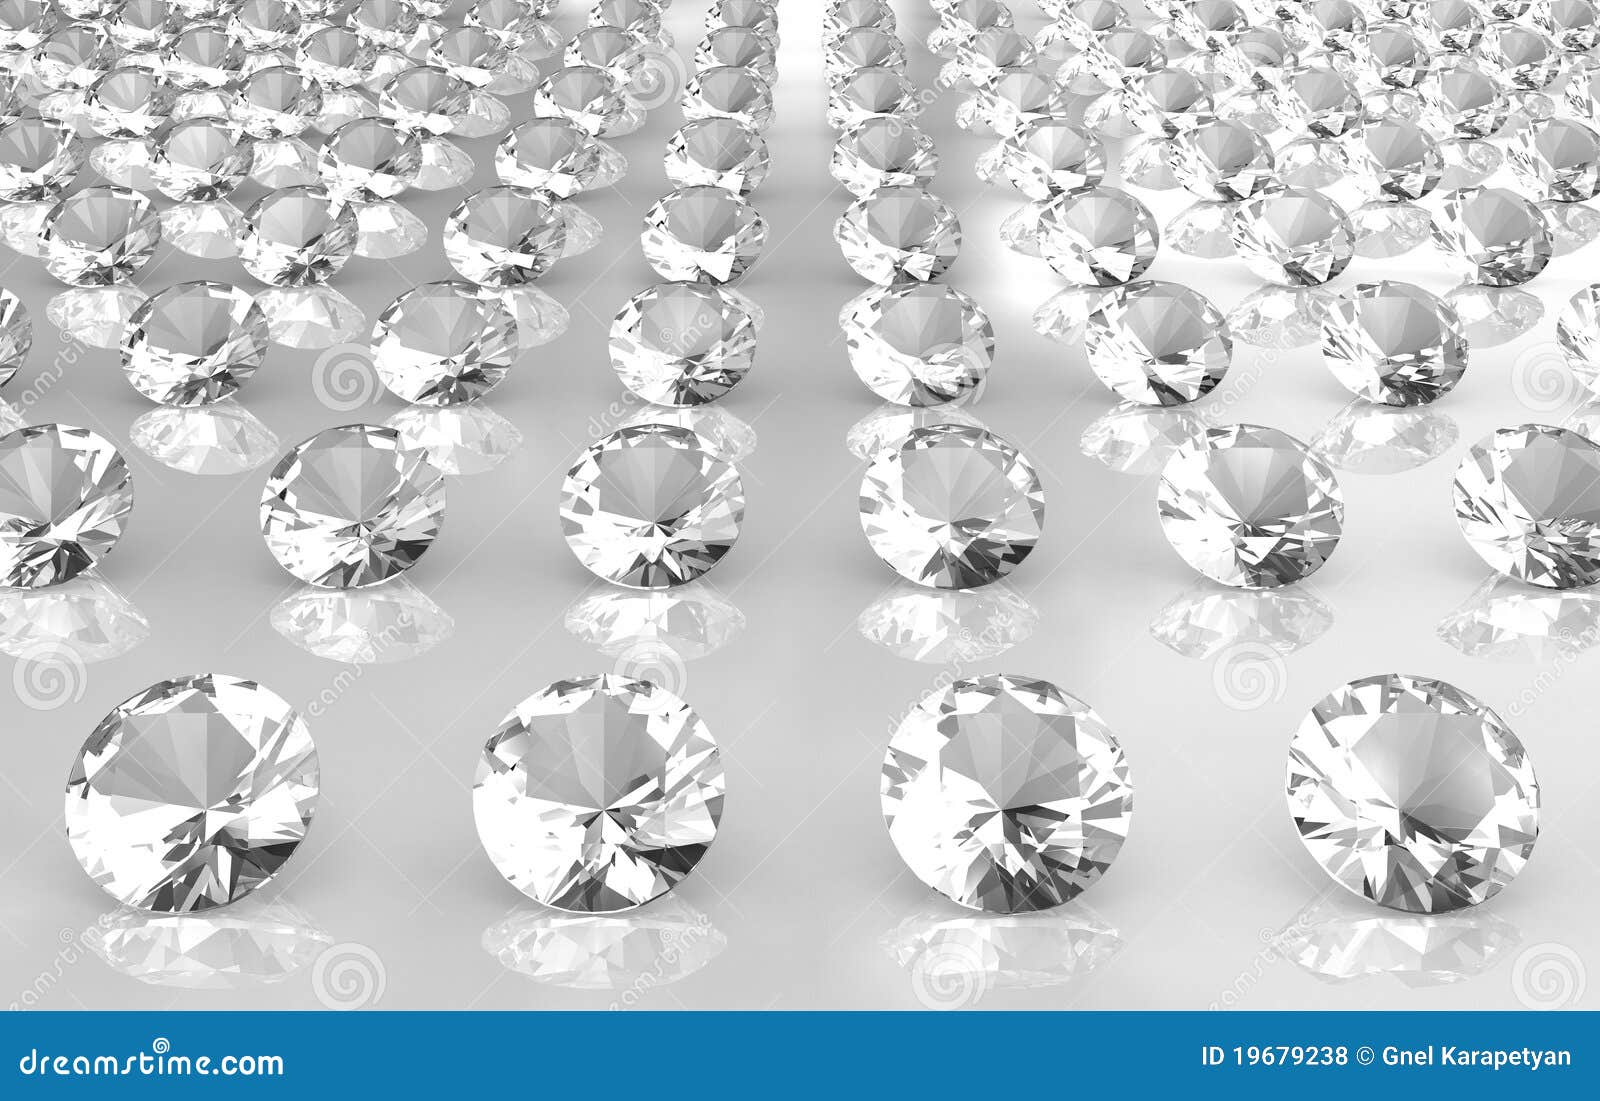 array of white brilliant cut round diamonds